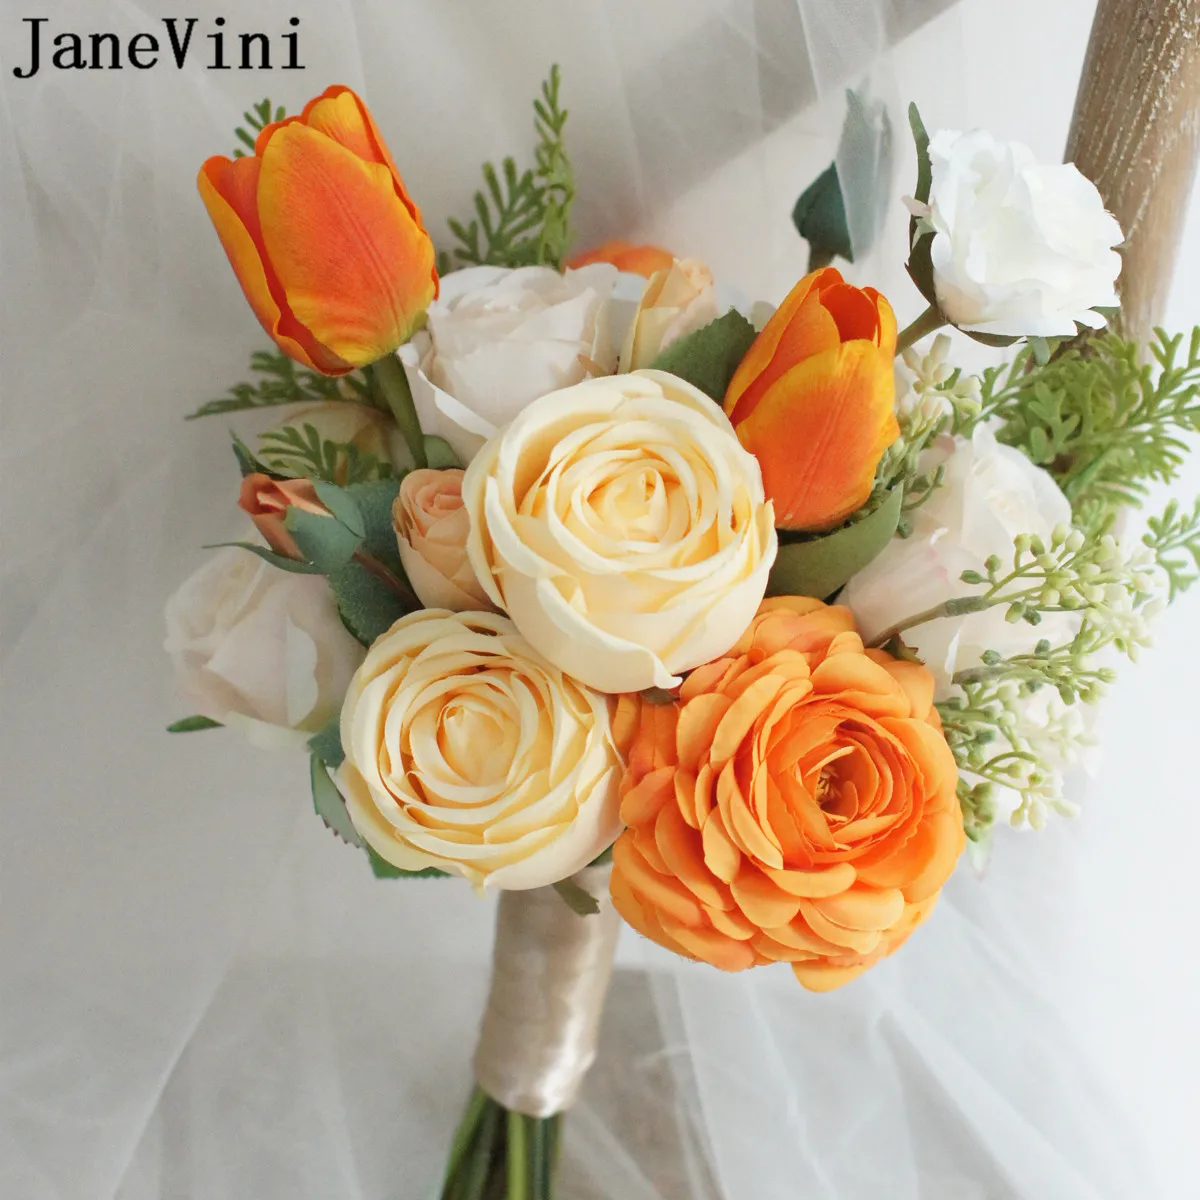 janevini-造花の形をしたブーケシャンパンカラー造花の保持結婚式用コレクション2021